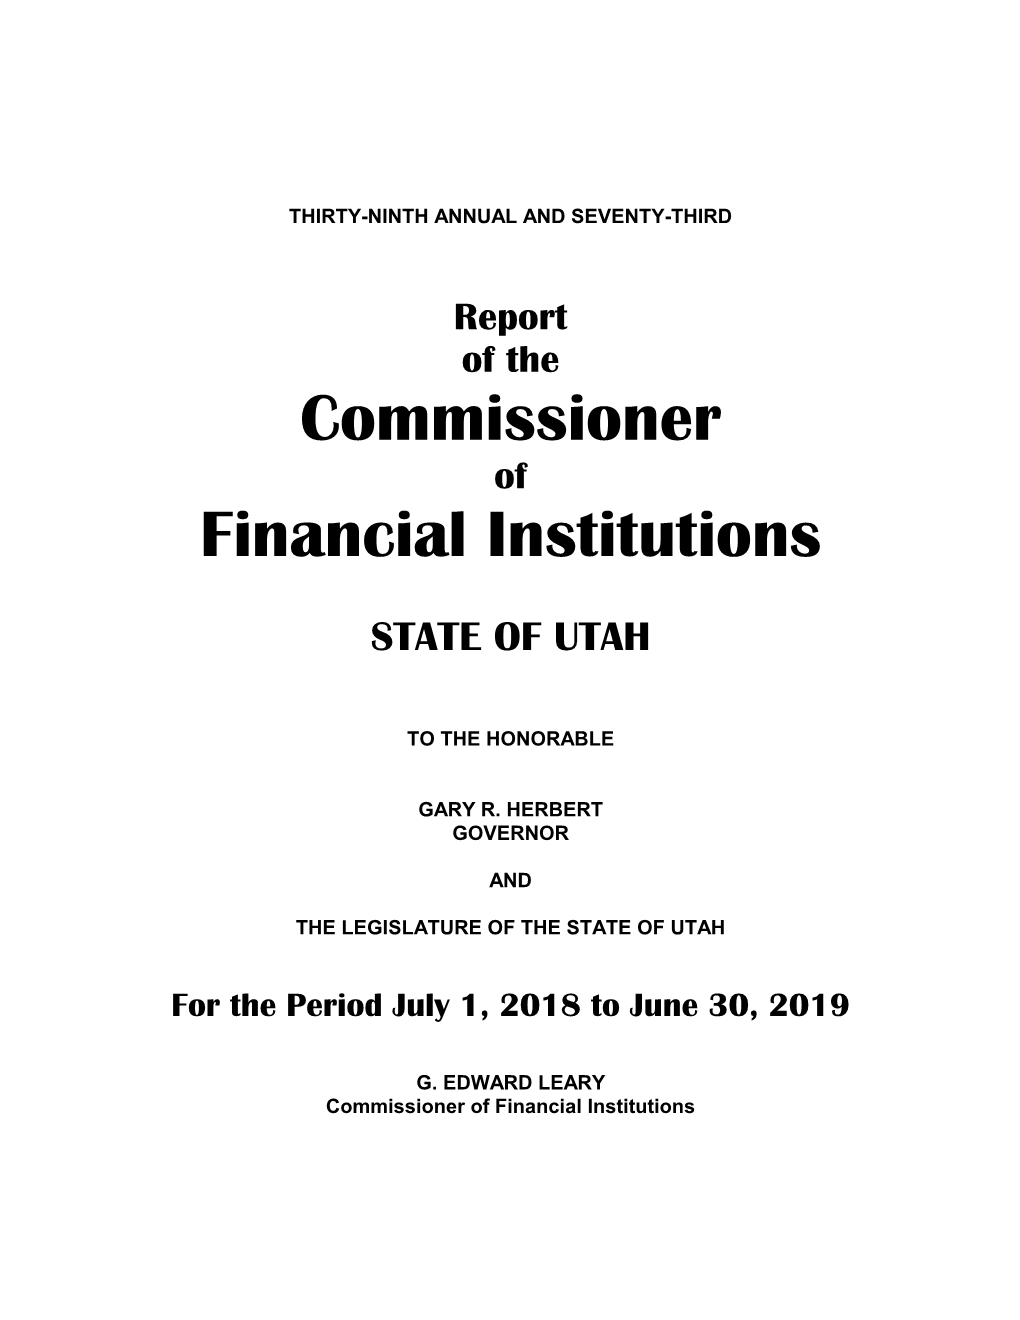 UDFI Annual Report-2019